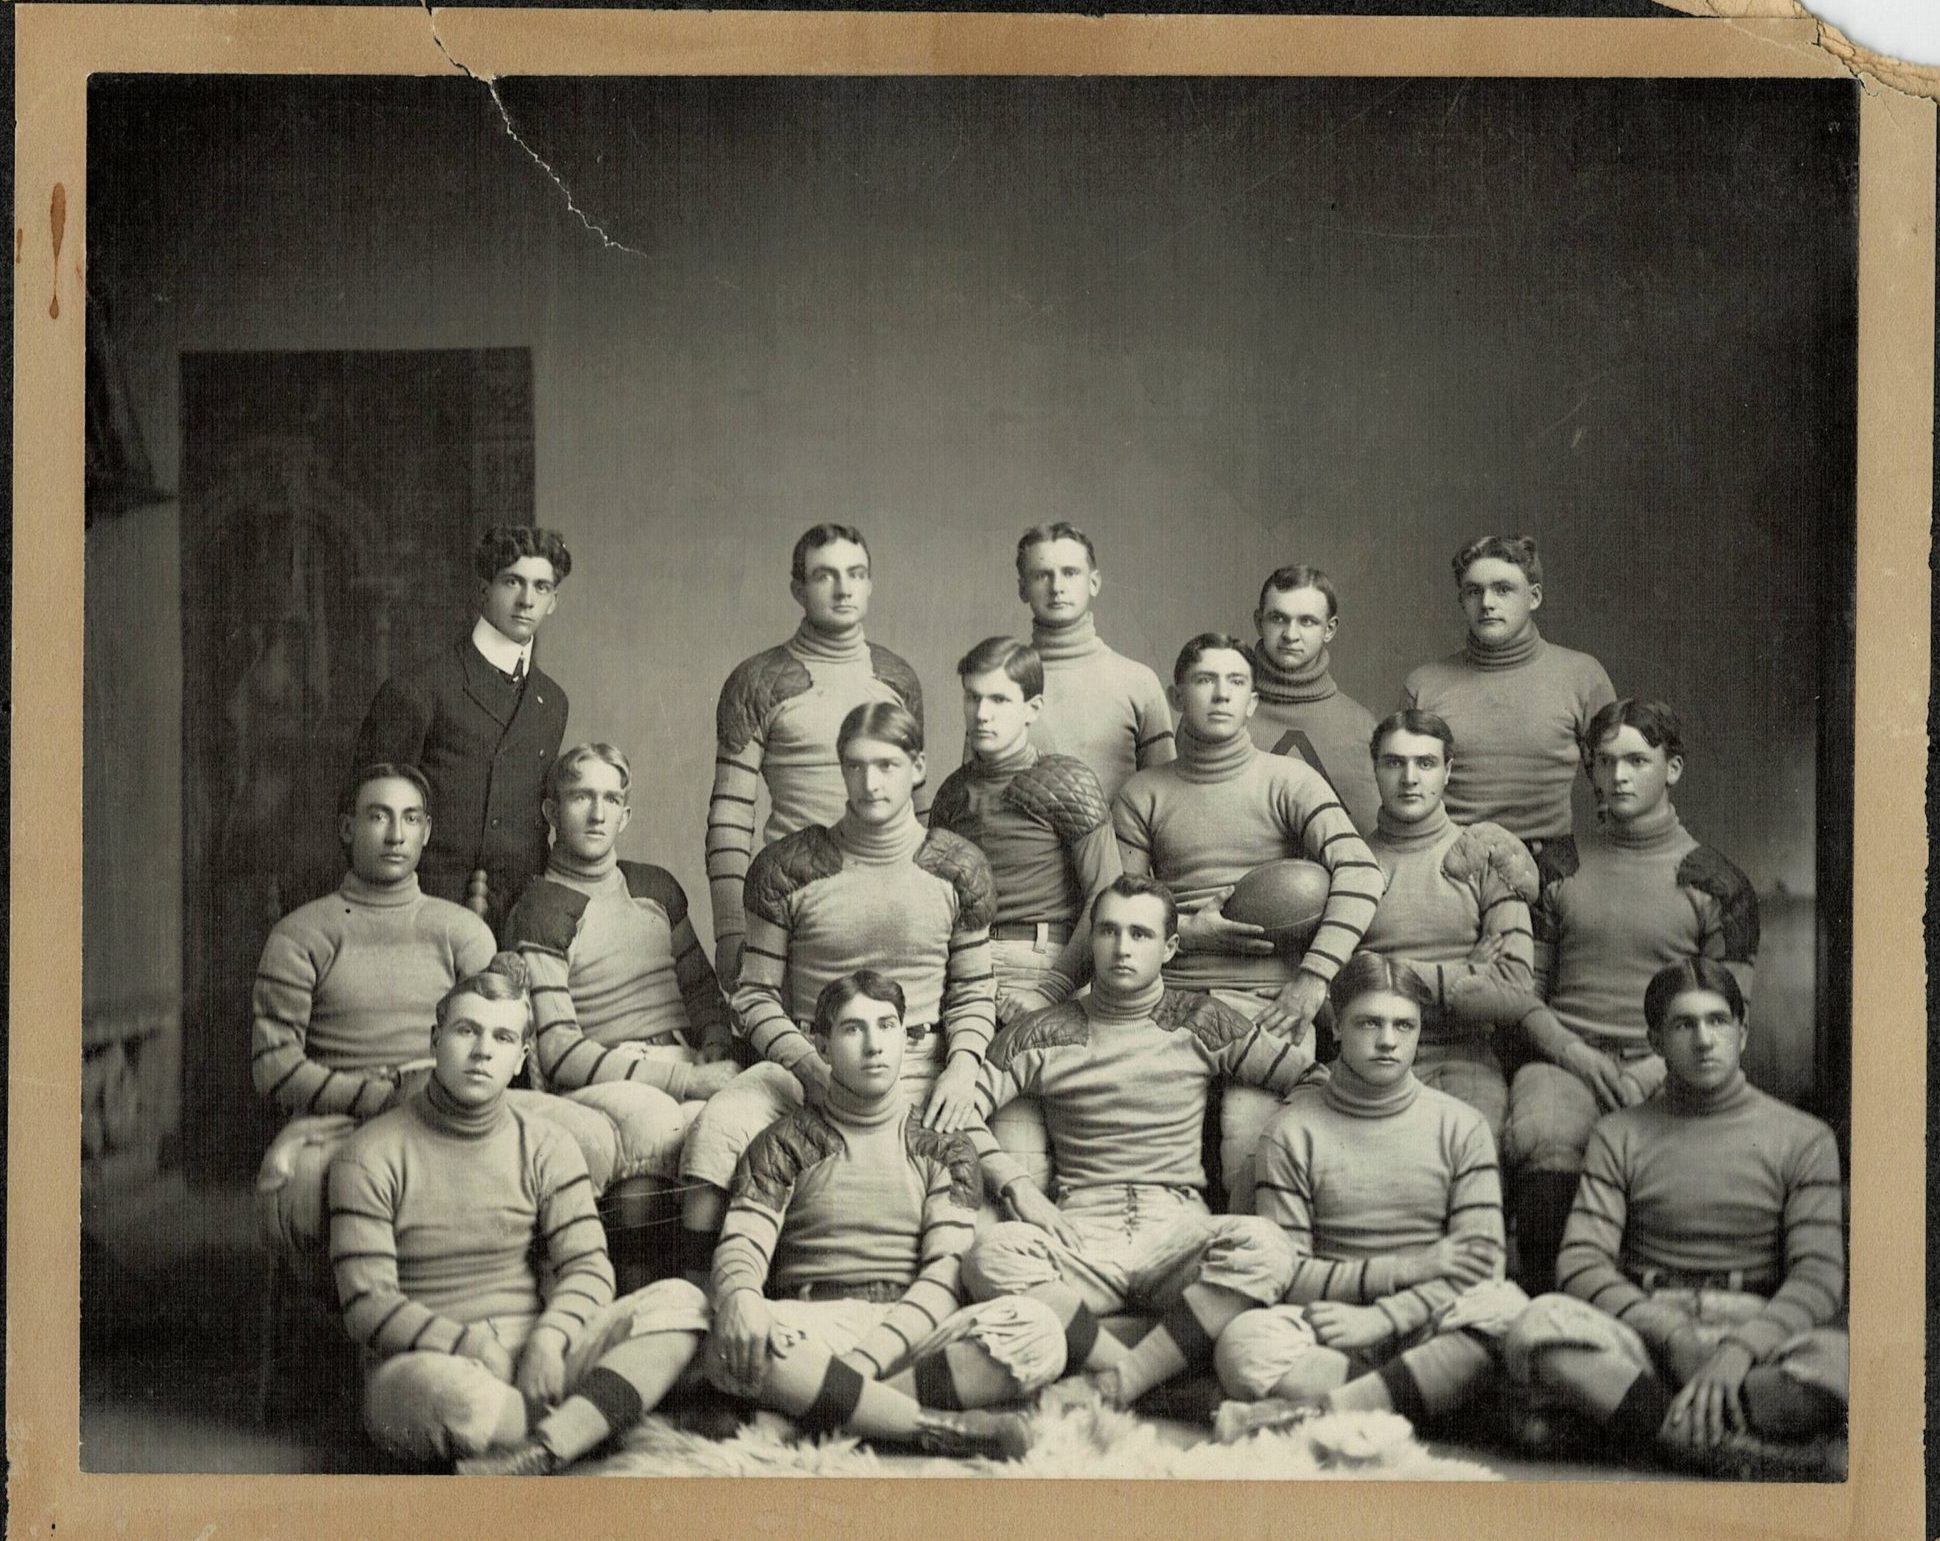 University of Arizona Football Team 1902/1903